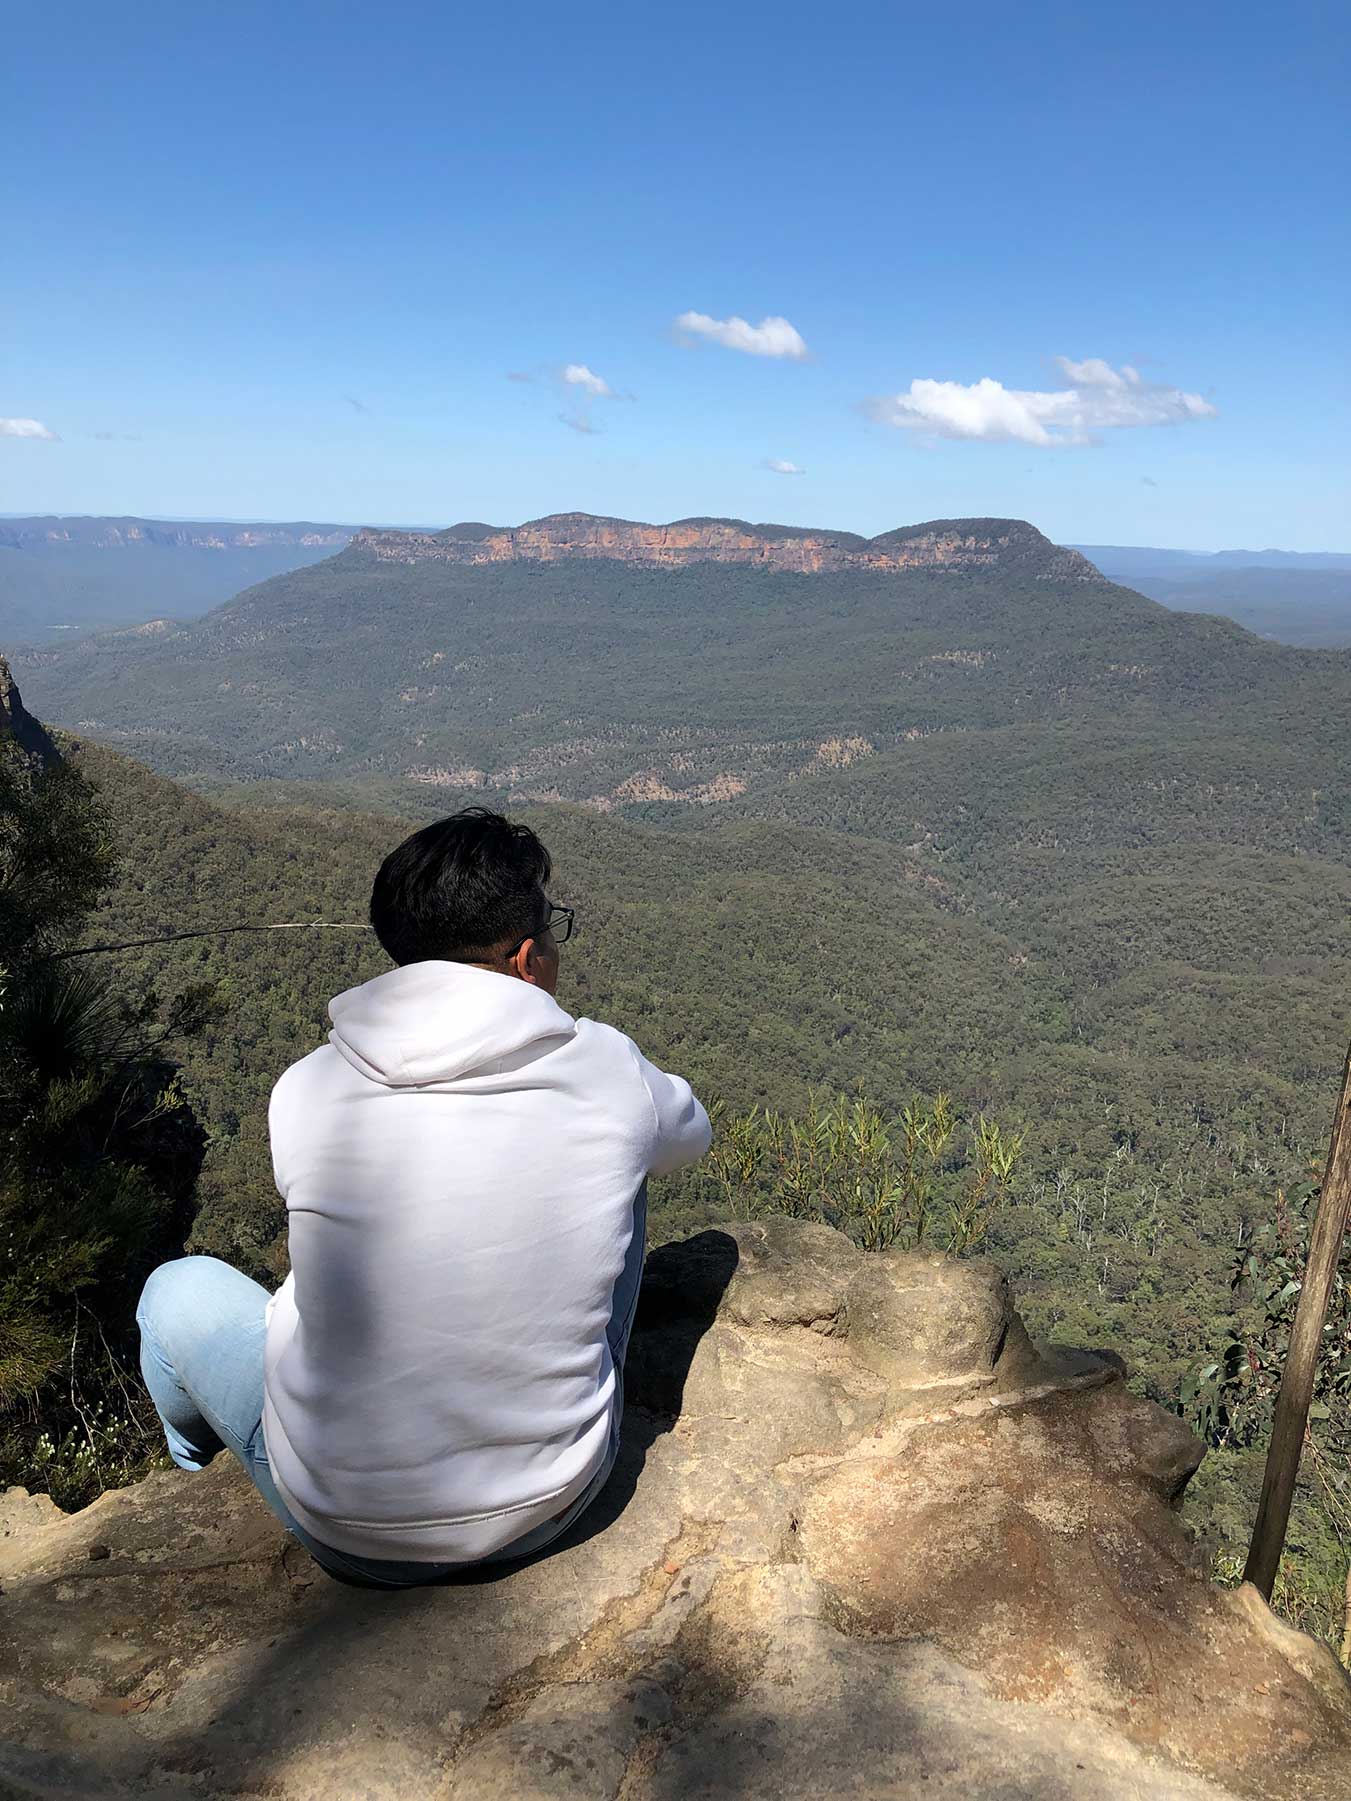 Study Abroad student Leonardo Velasco looks out over the Australian countryside